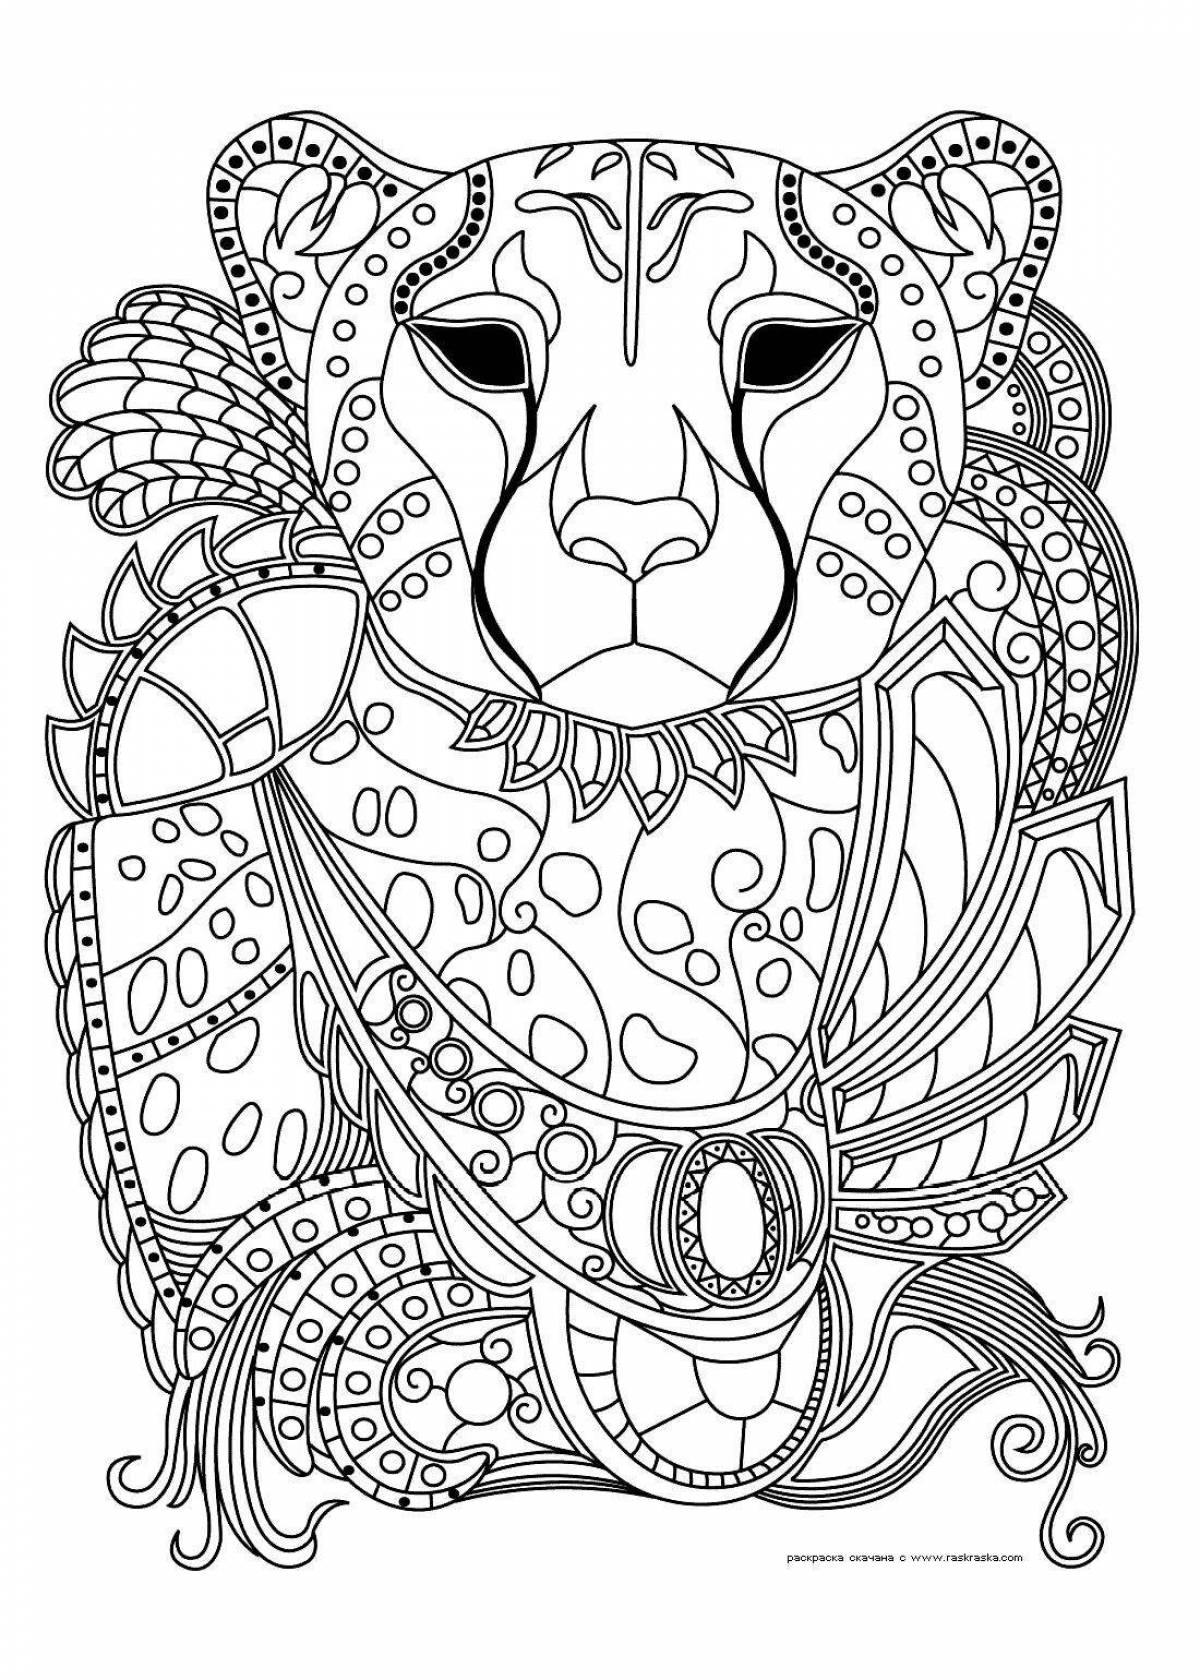 Wonderful animal mandala coloring page